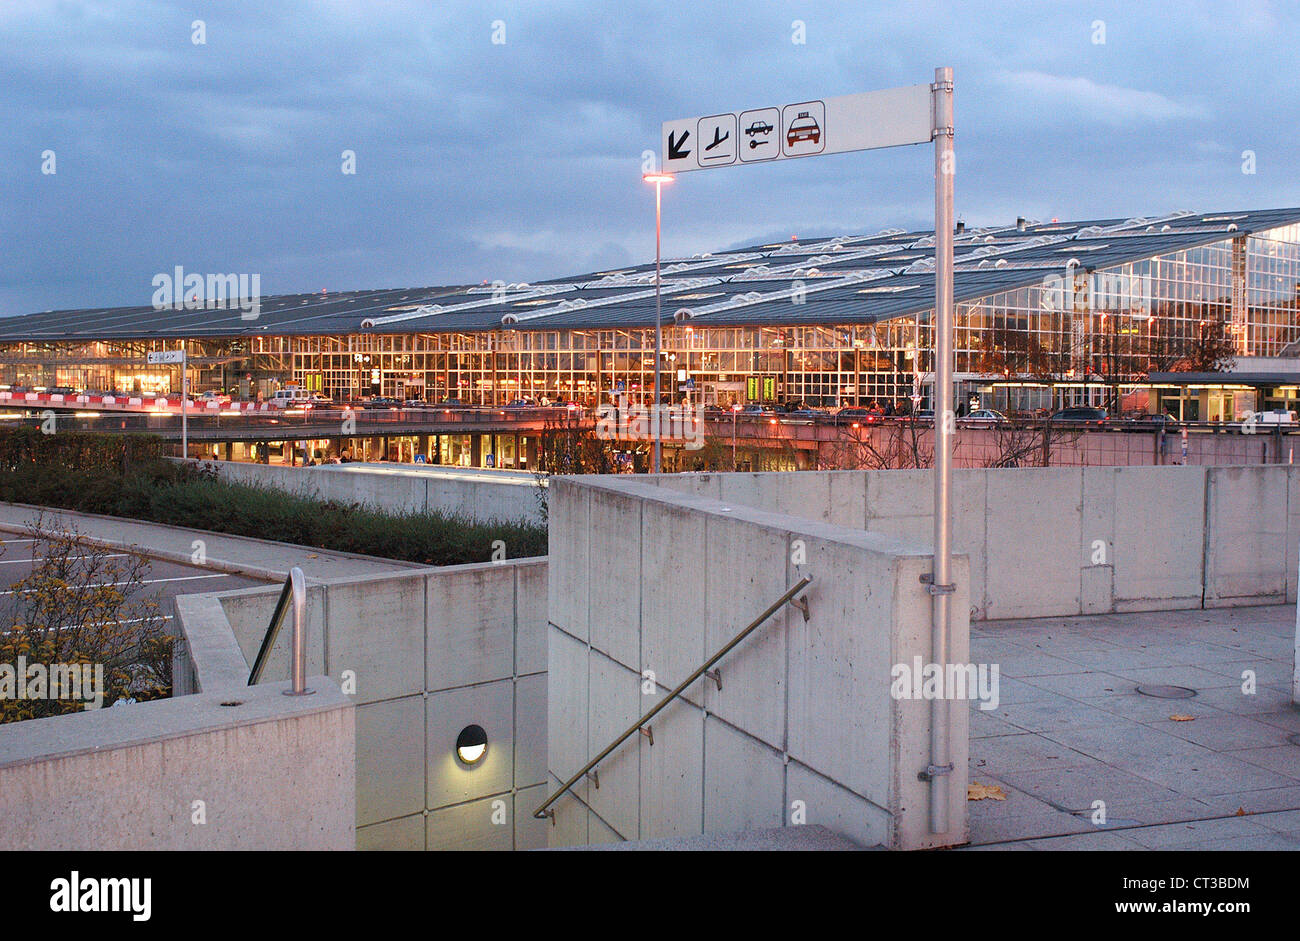 Flughafen Stuttgart Stockfoto